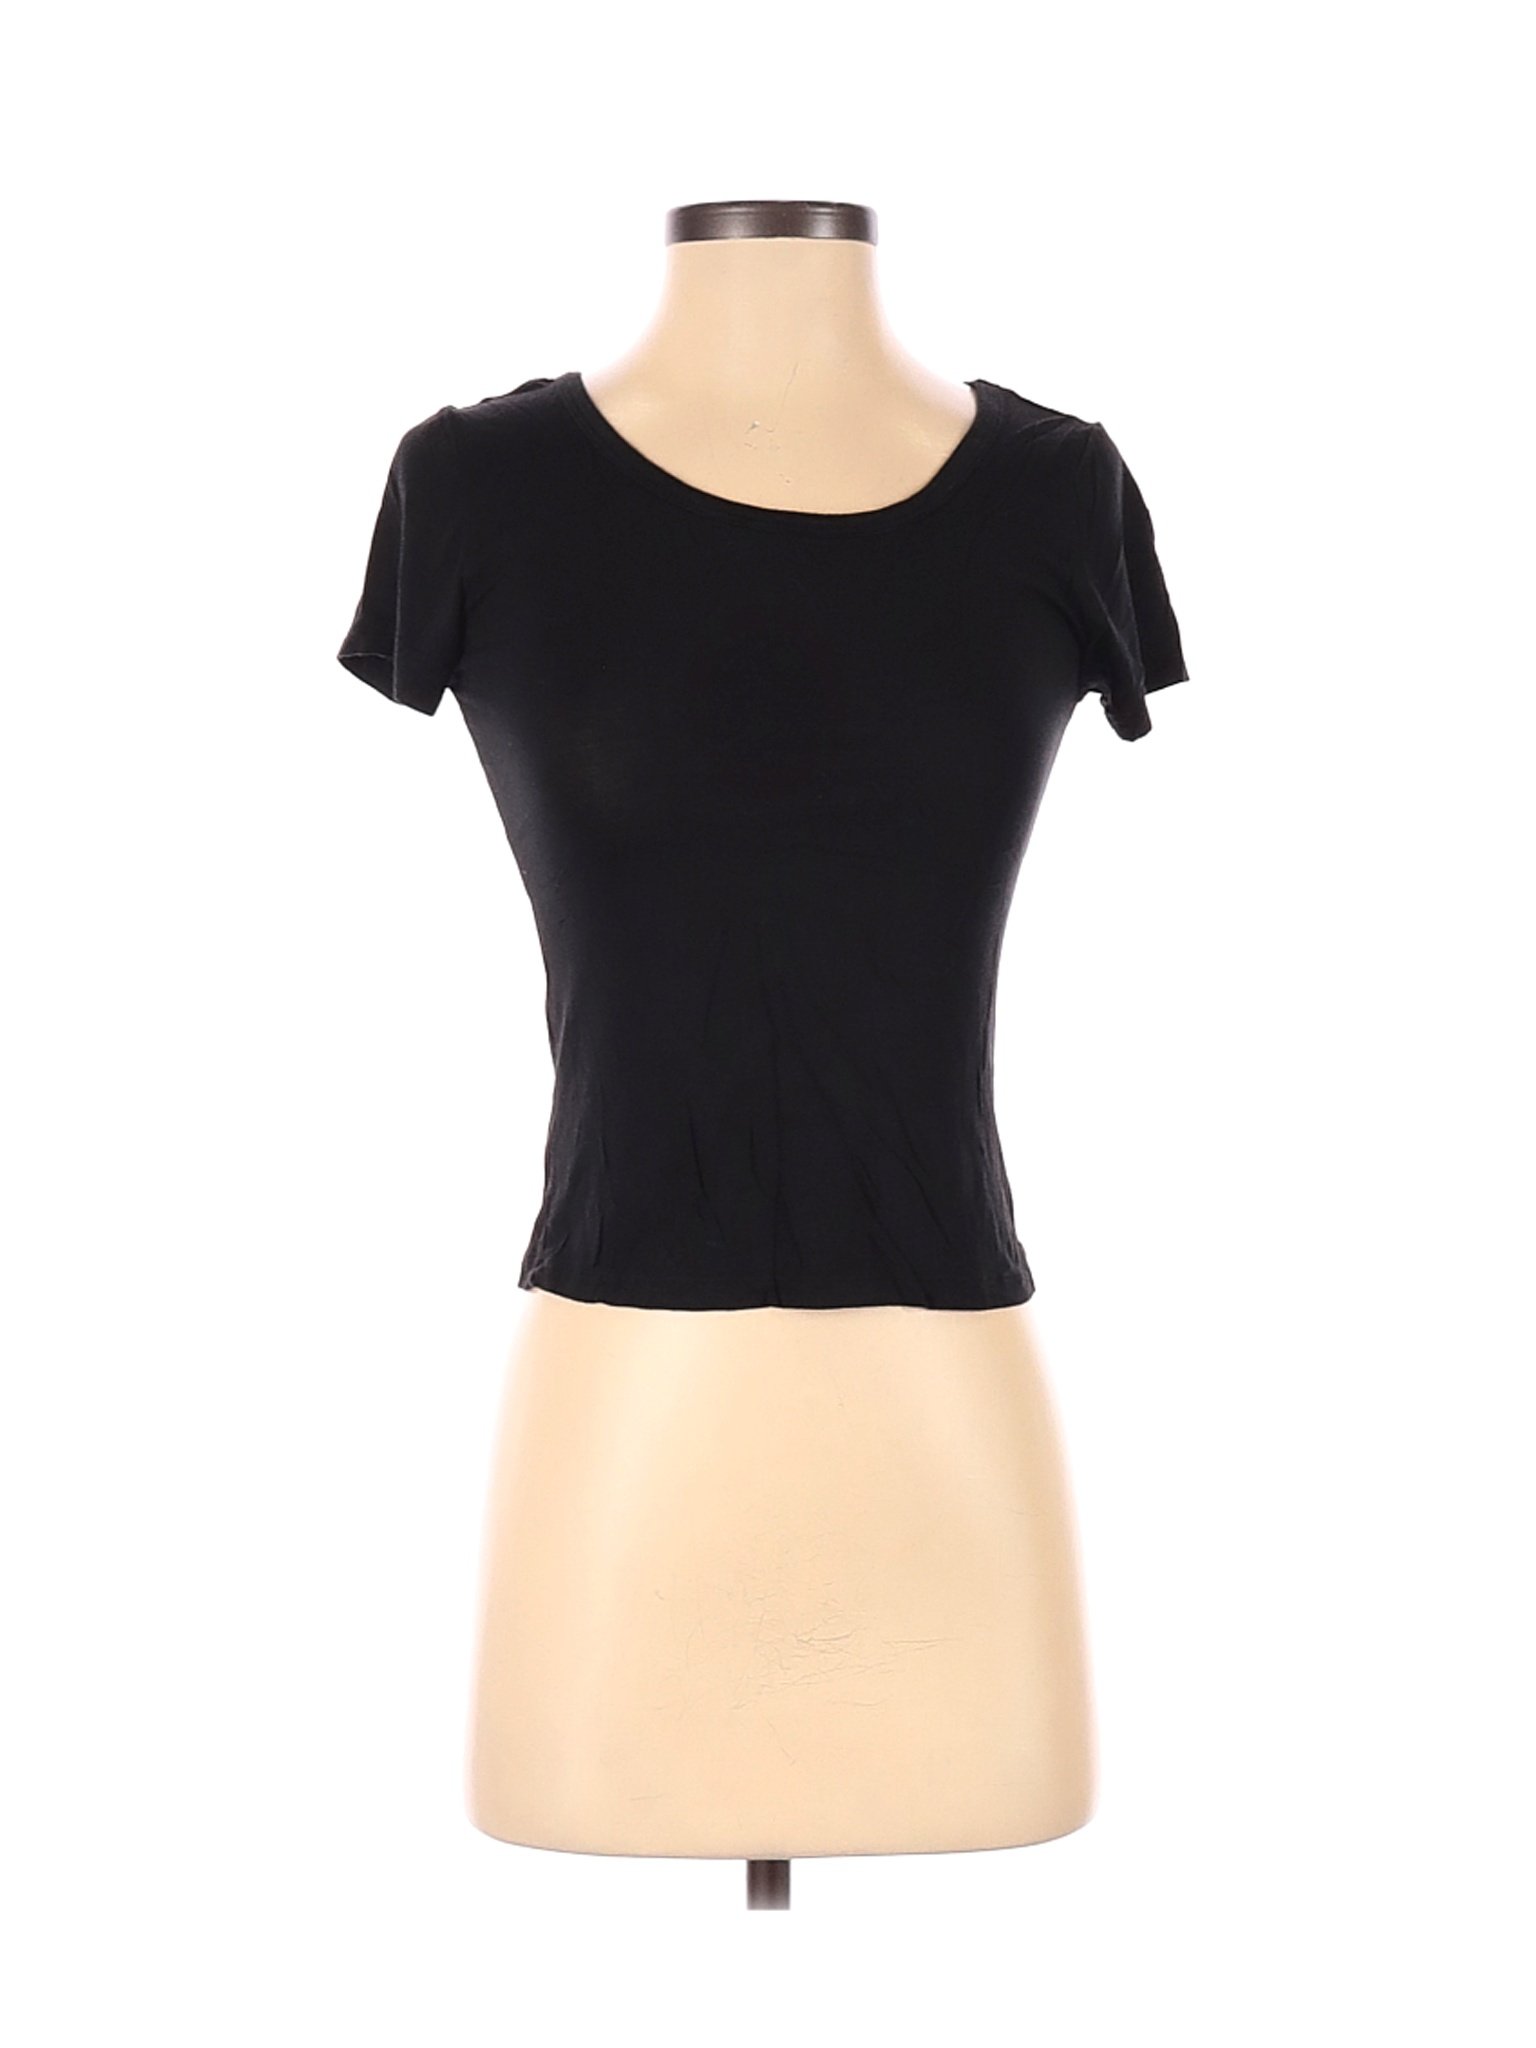 Charlotte Russe Women Black Short Sleeve T-Shirt XS | eBay